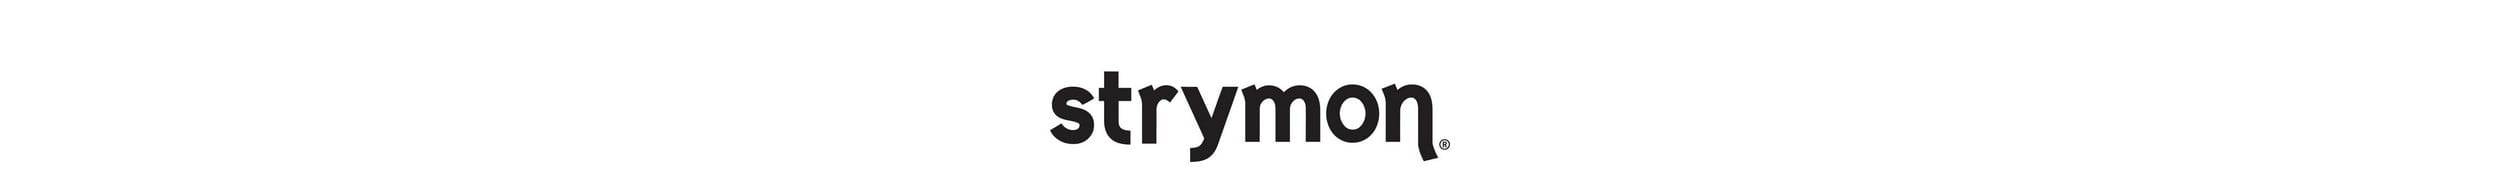 Strymon Logo Transparent Logo